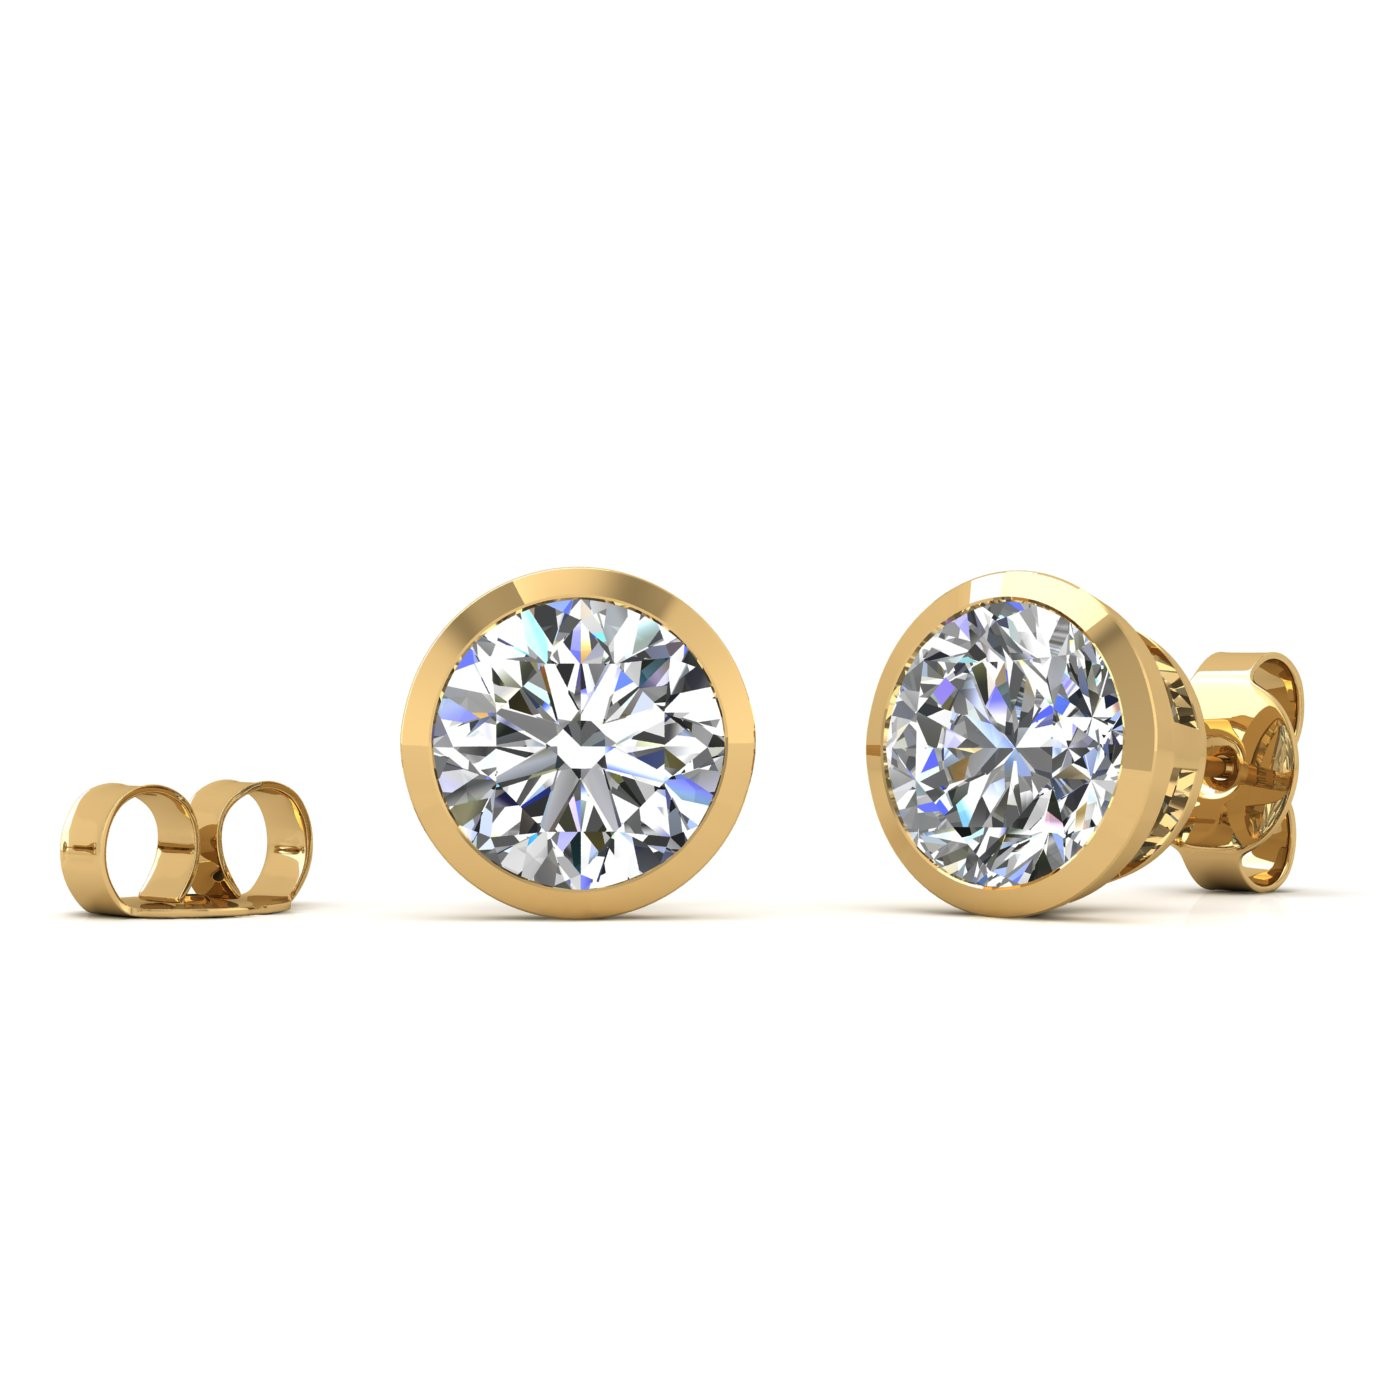 18k yellow gold 2.0 ct each (4,0 tcw) round brilliant cut diamond bezel set earring studs Photos & images